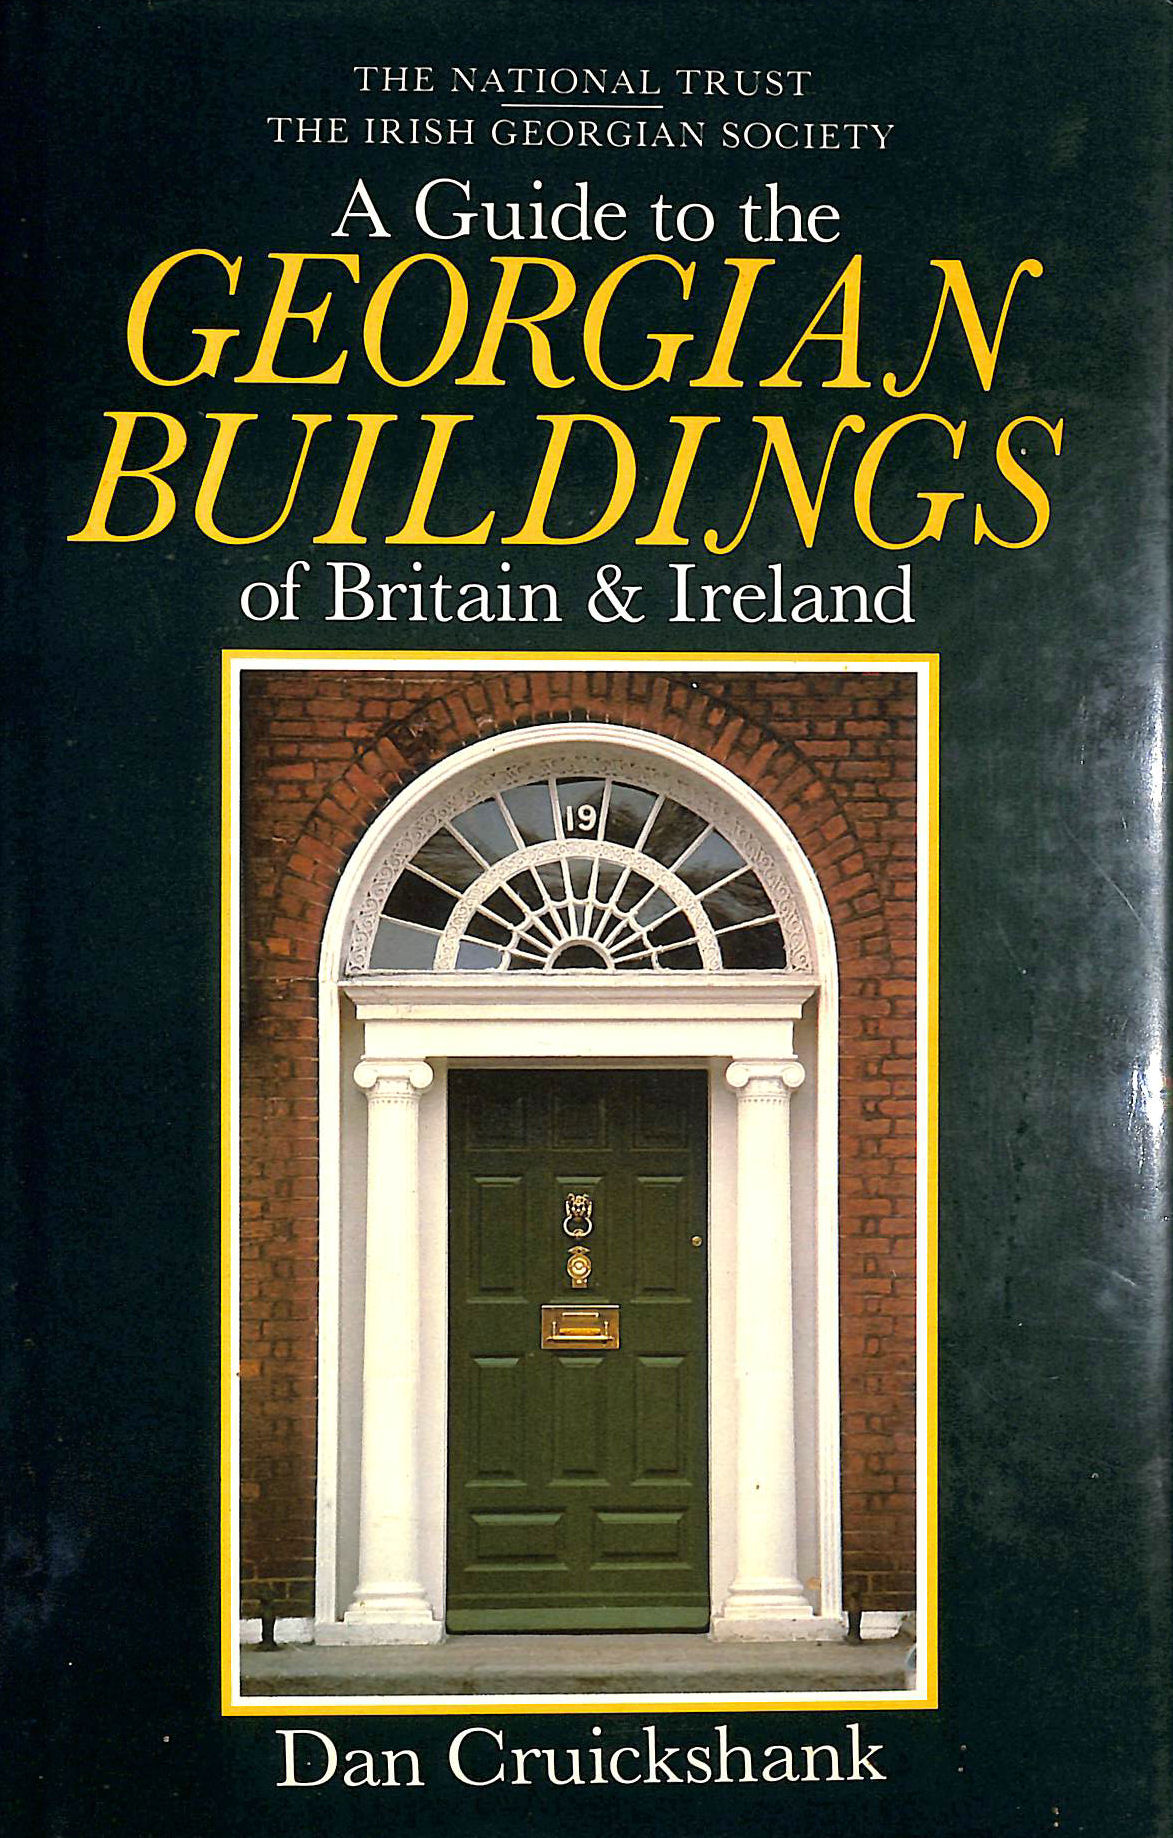 CRUICKSHANK, DAN - A Guide to the Georgian Buildings of Britain and Ireland